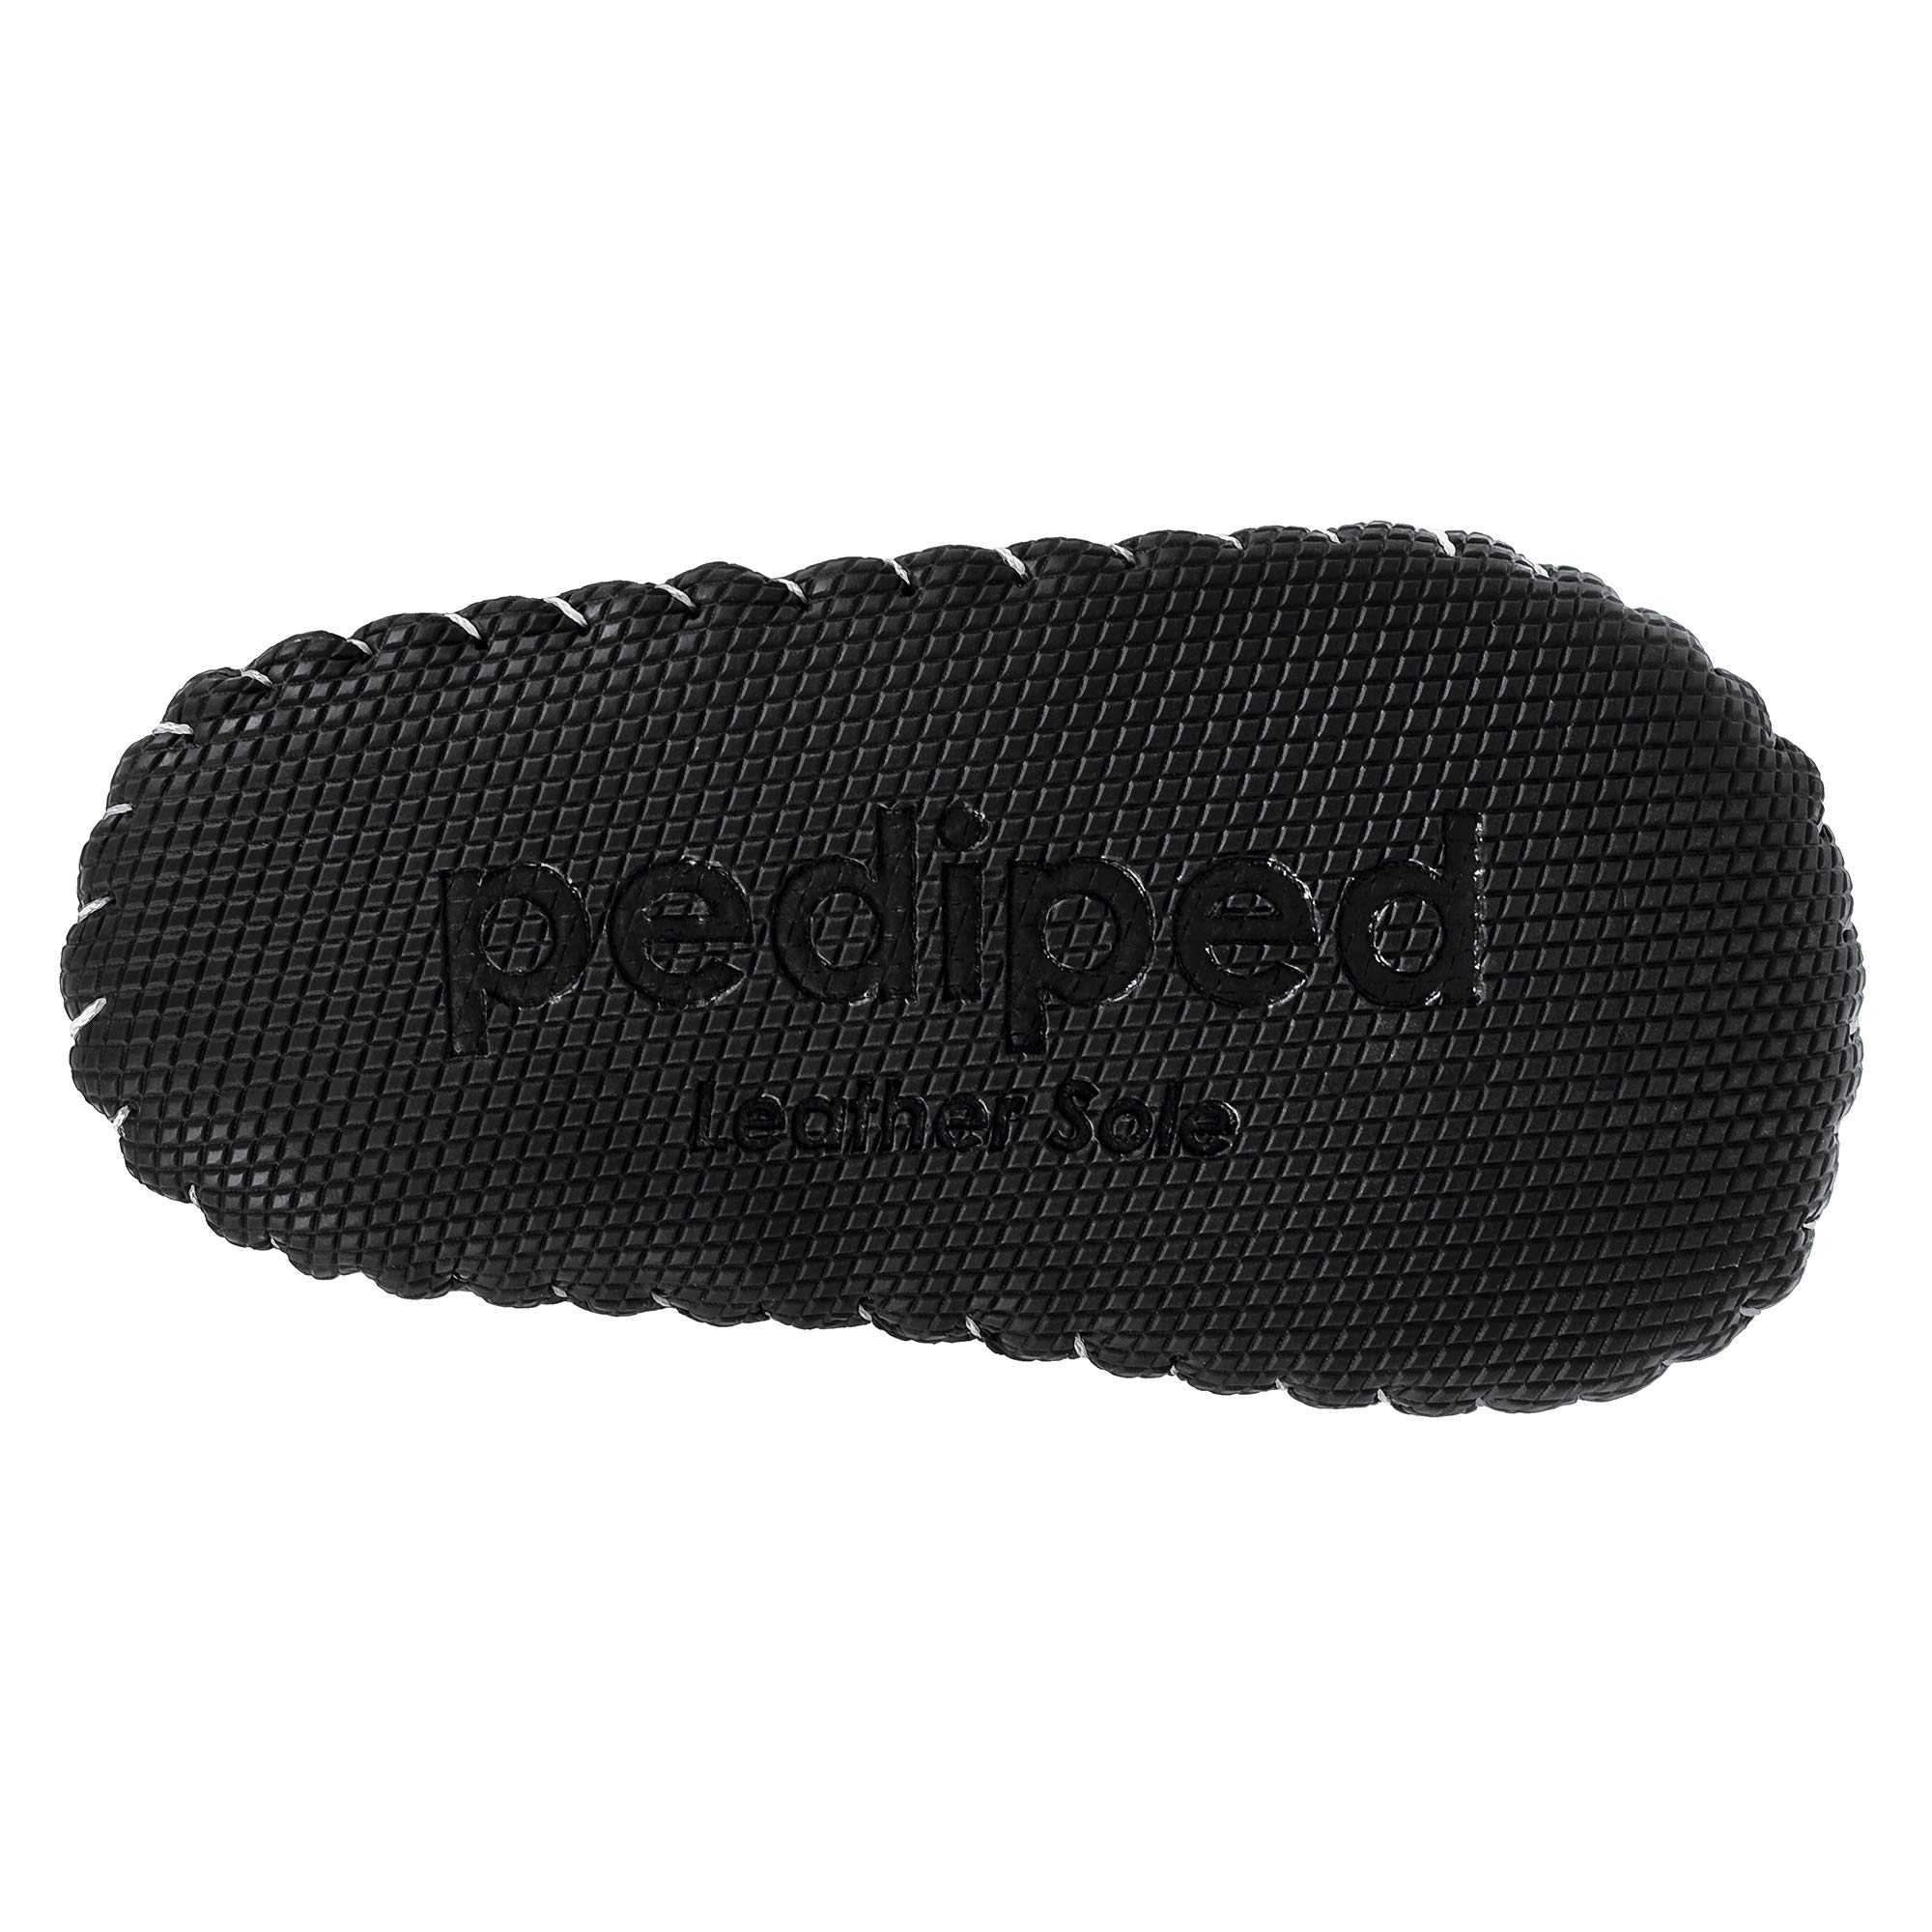 pediped Unisex-Child Sneaker Crib Shoe